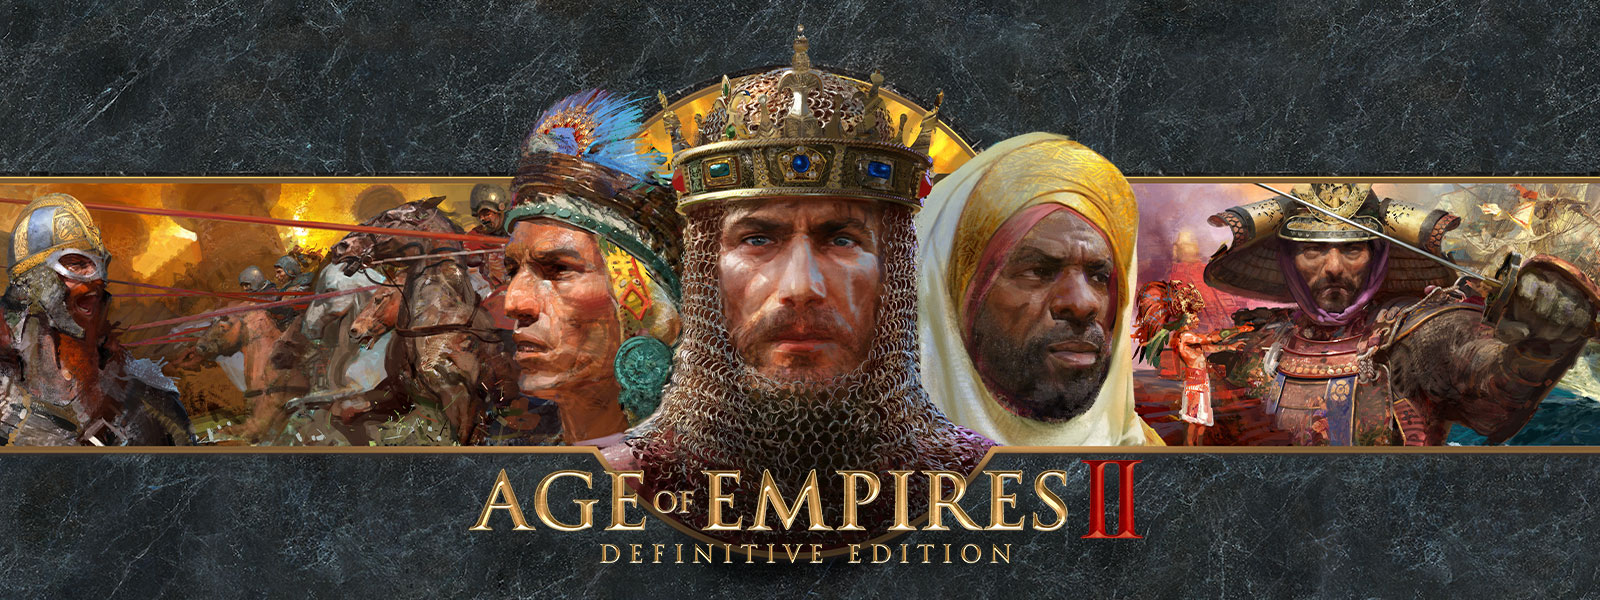 Age of Empires II: Definitive Edition-logo mot en skifergrå bakgrunn med hærledere og deres armeer